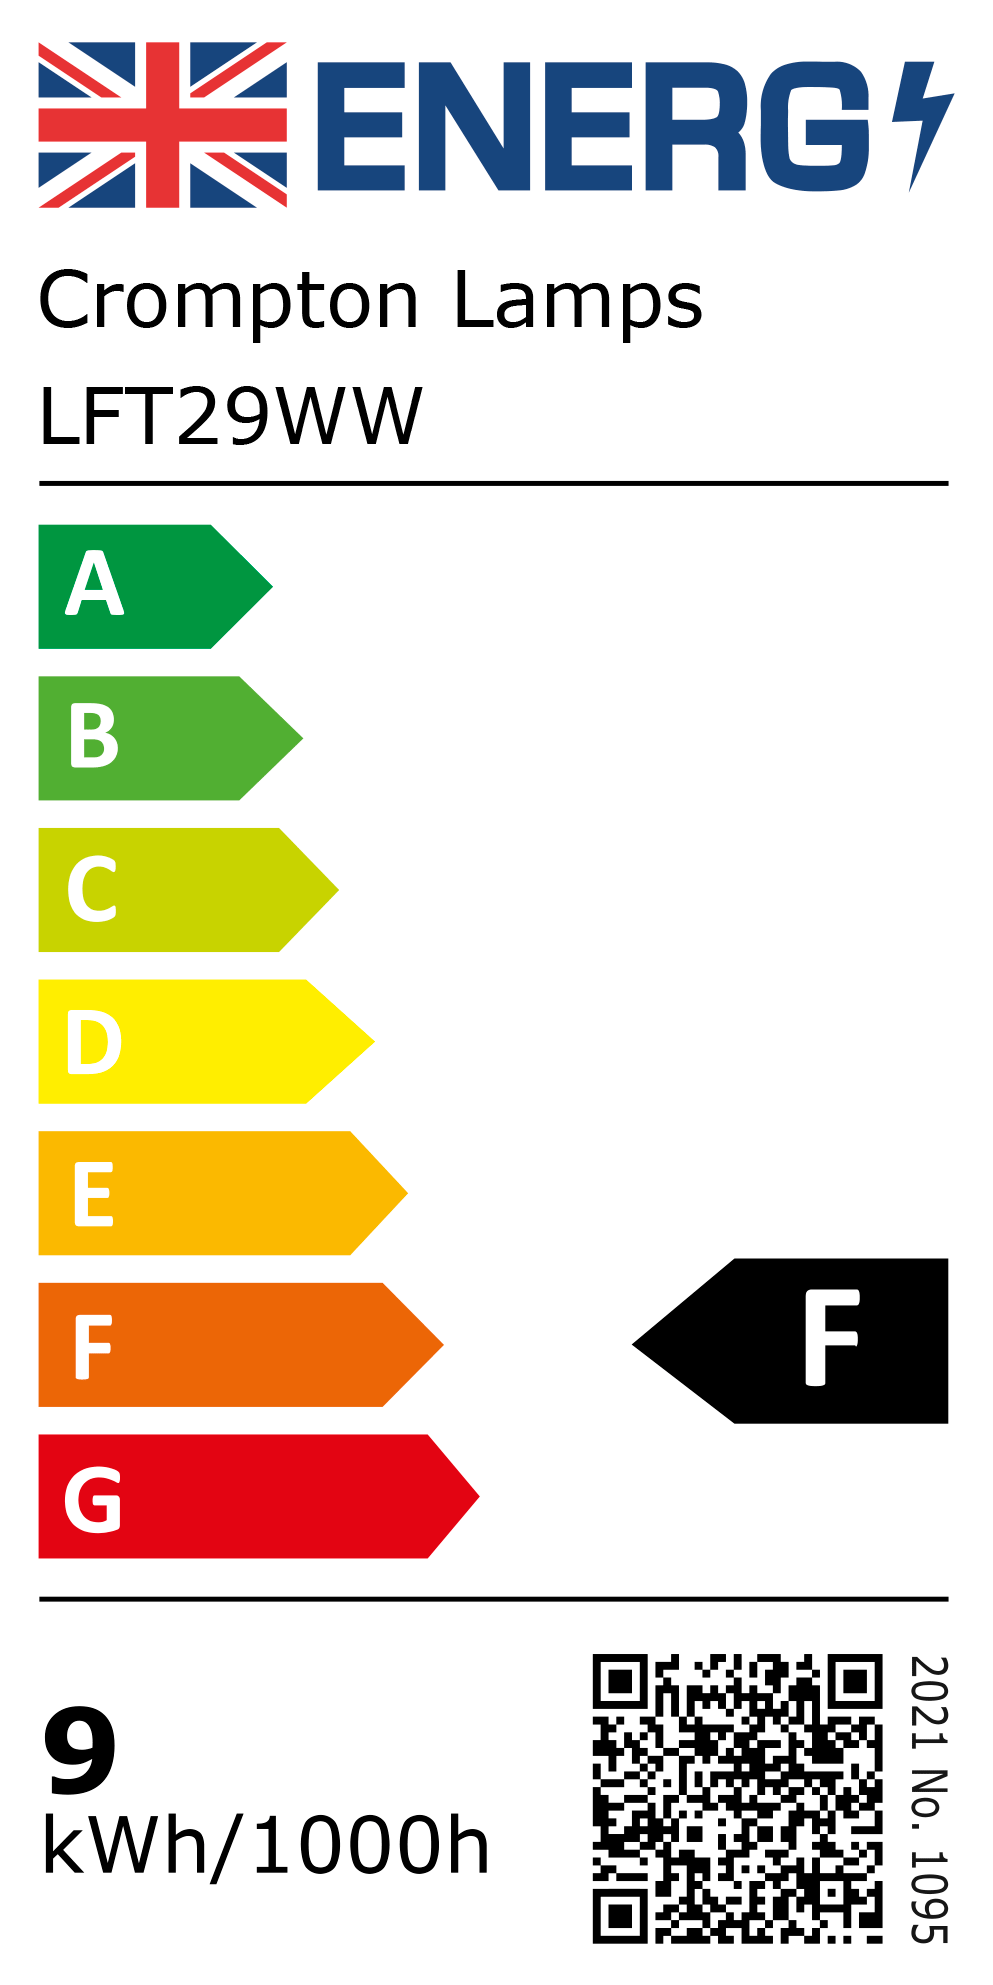 New 2021 Energy Rating Label: Stock Code LFT29WW